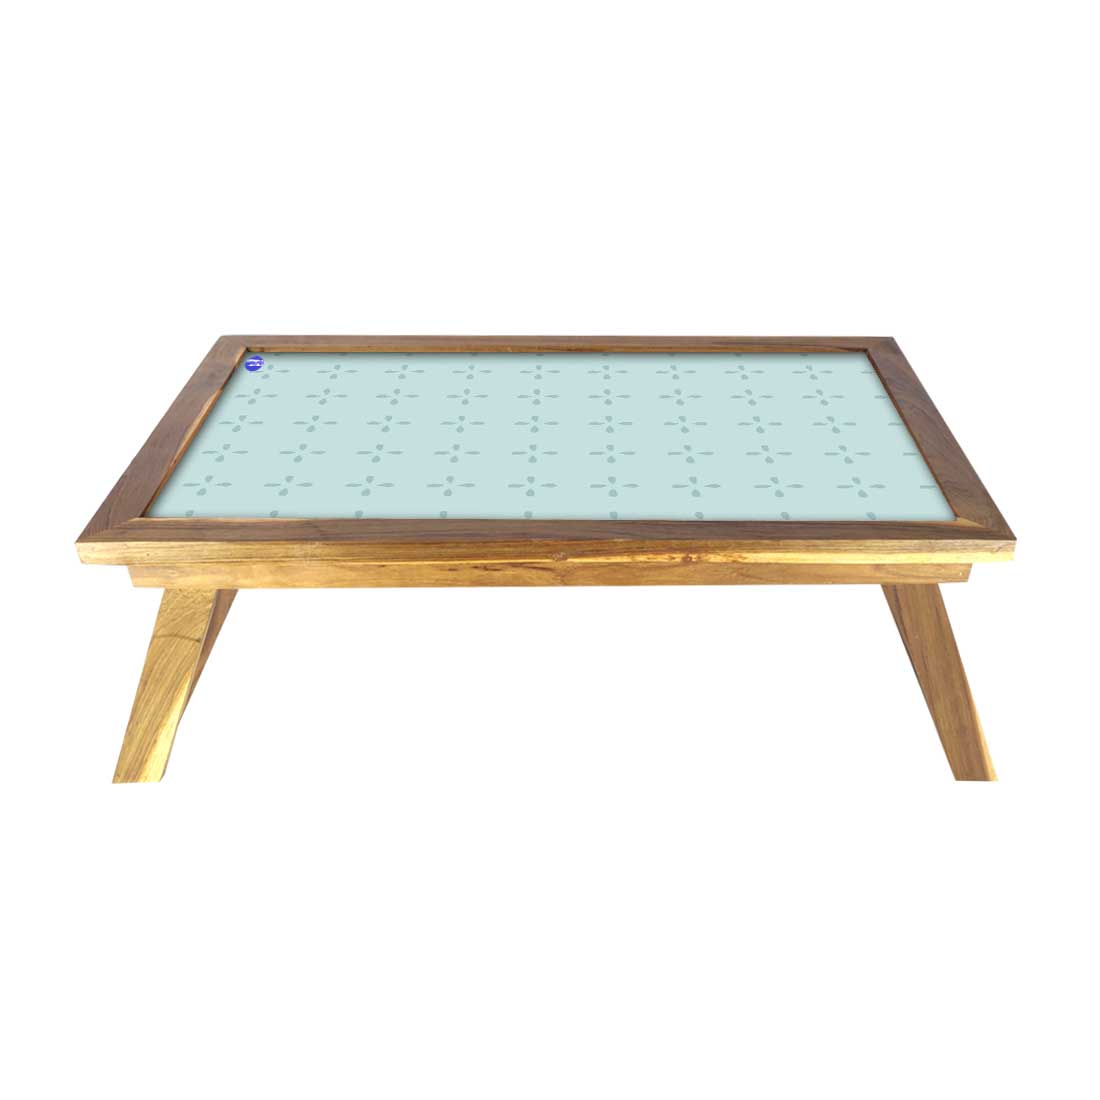 Wooden Folding Breakfast in Bed Tray for Home - Blue Pattern Nutcase